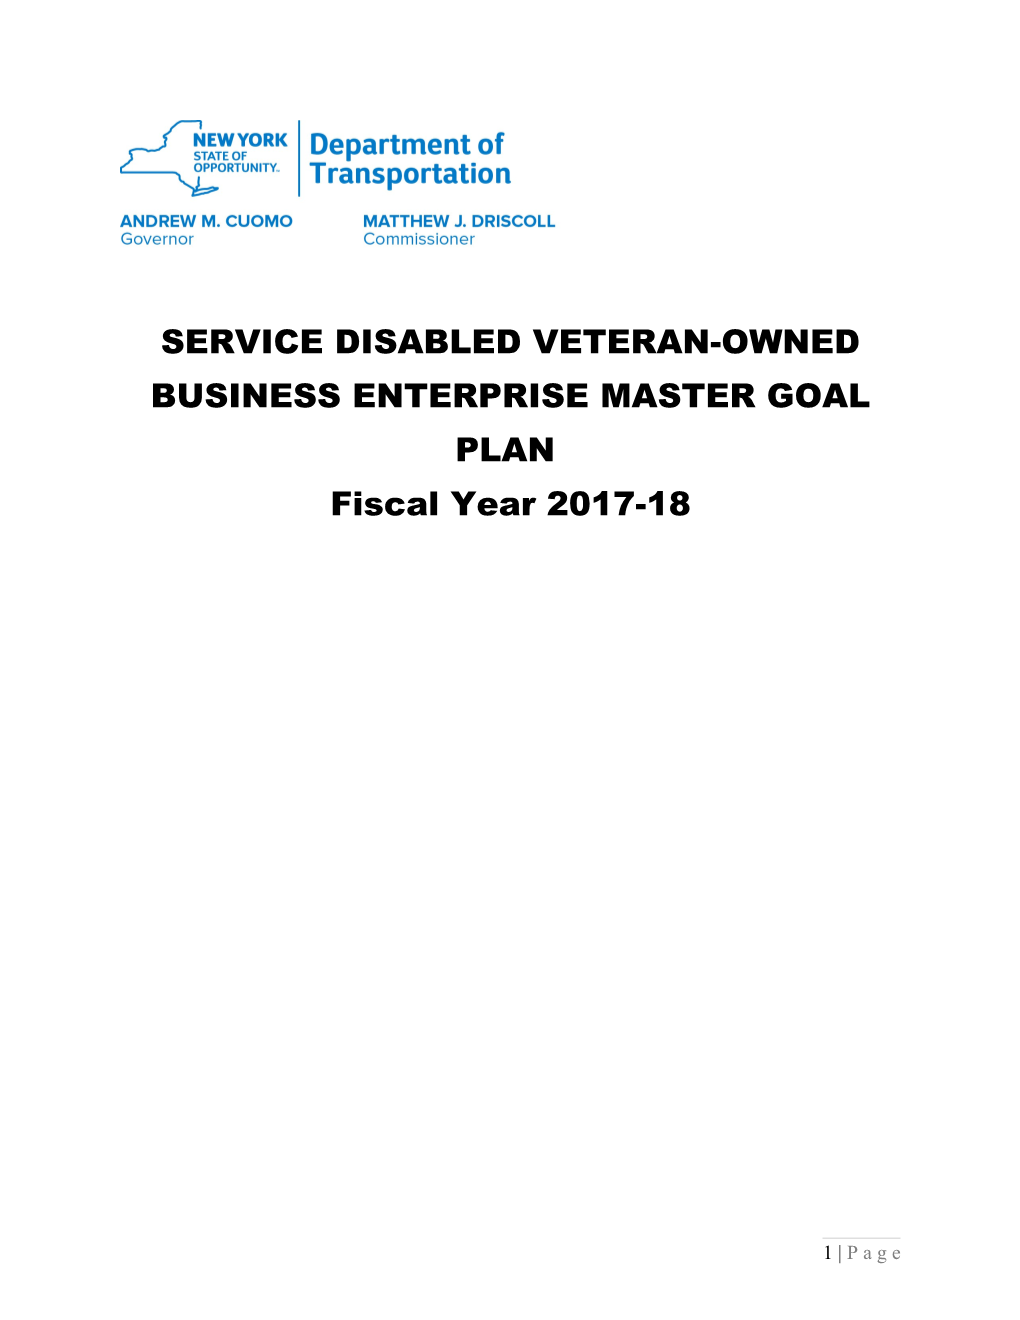 Service Disabled Veteran-Owned Business Enterprise Master Goal Plan